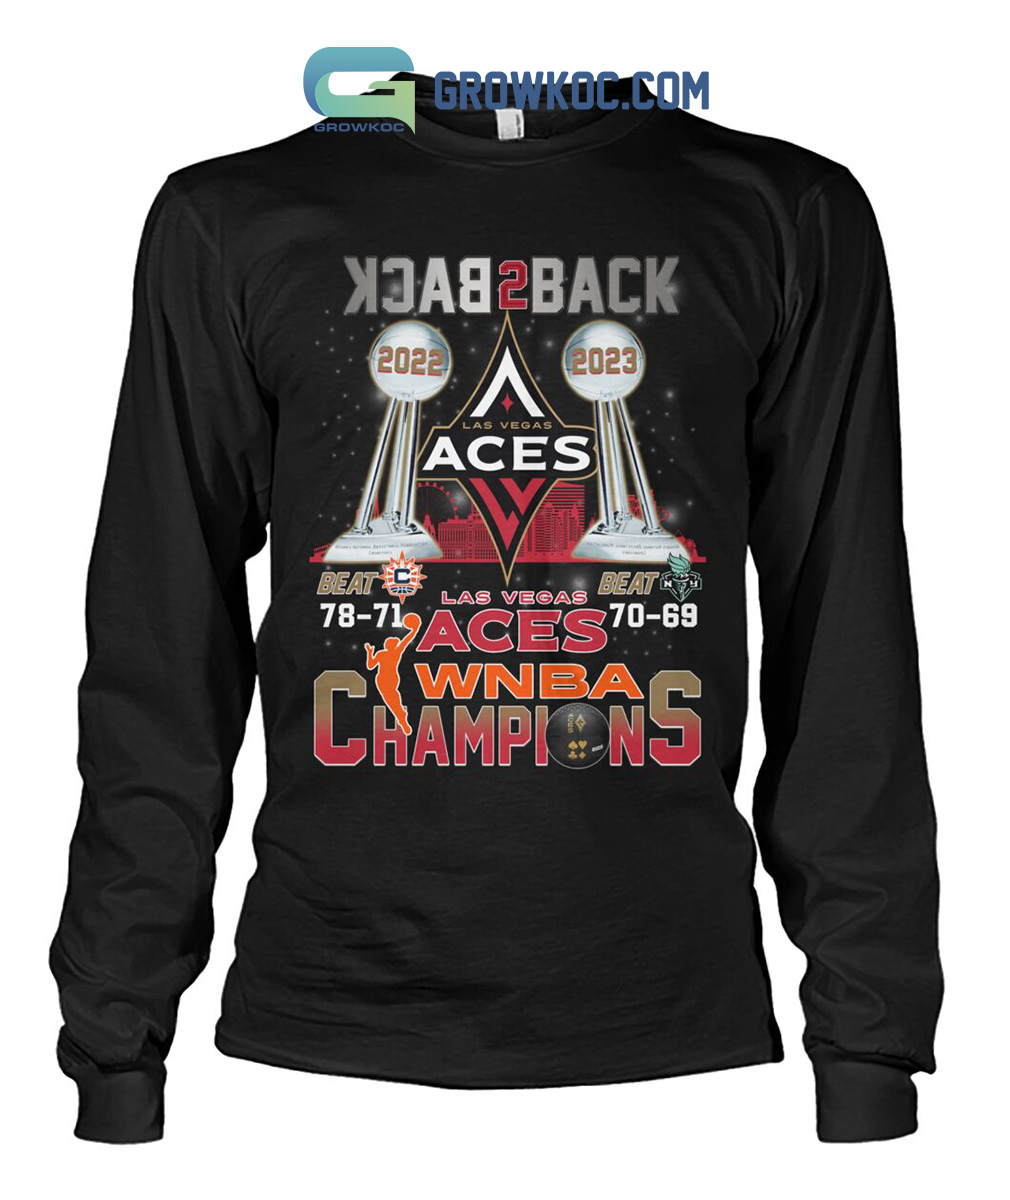 Unisex Las Vegas Aces Stadium Essentials Red Back-To-Back WNBA Finals  Champions T-Shirt